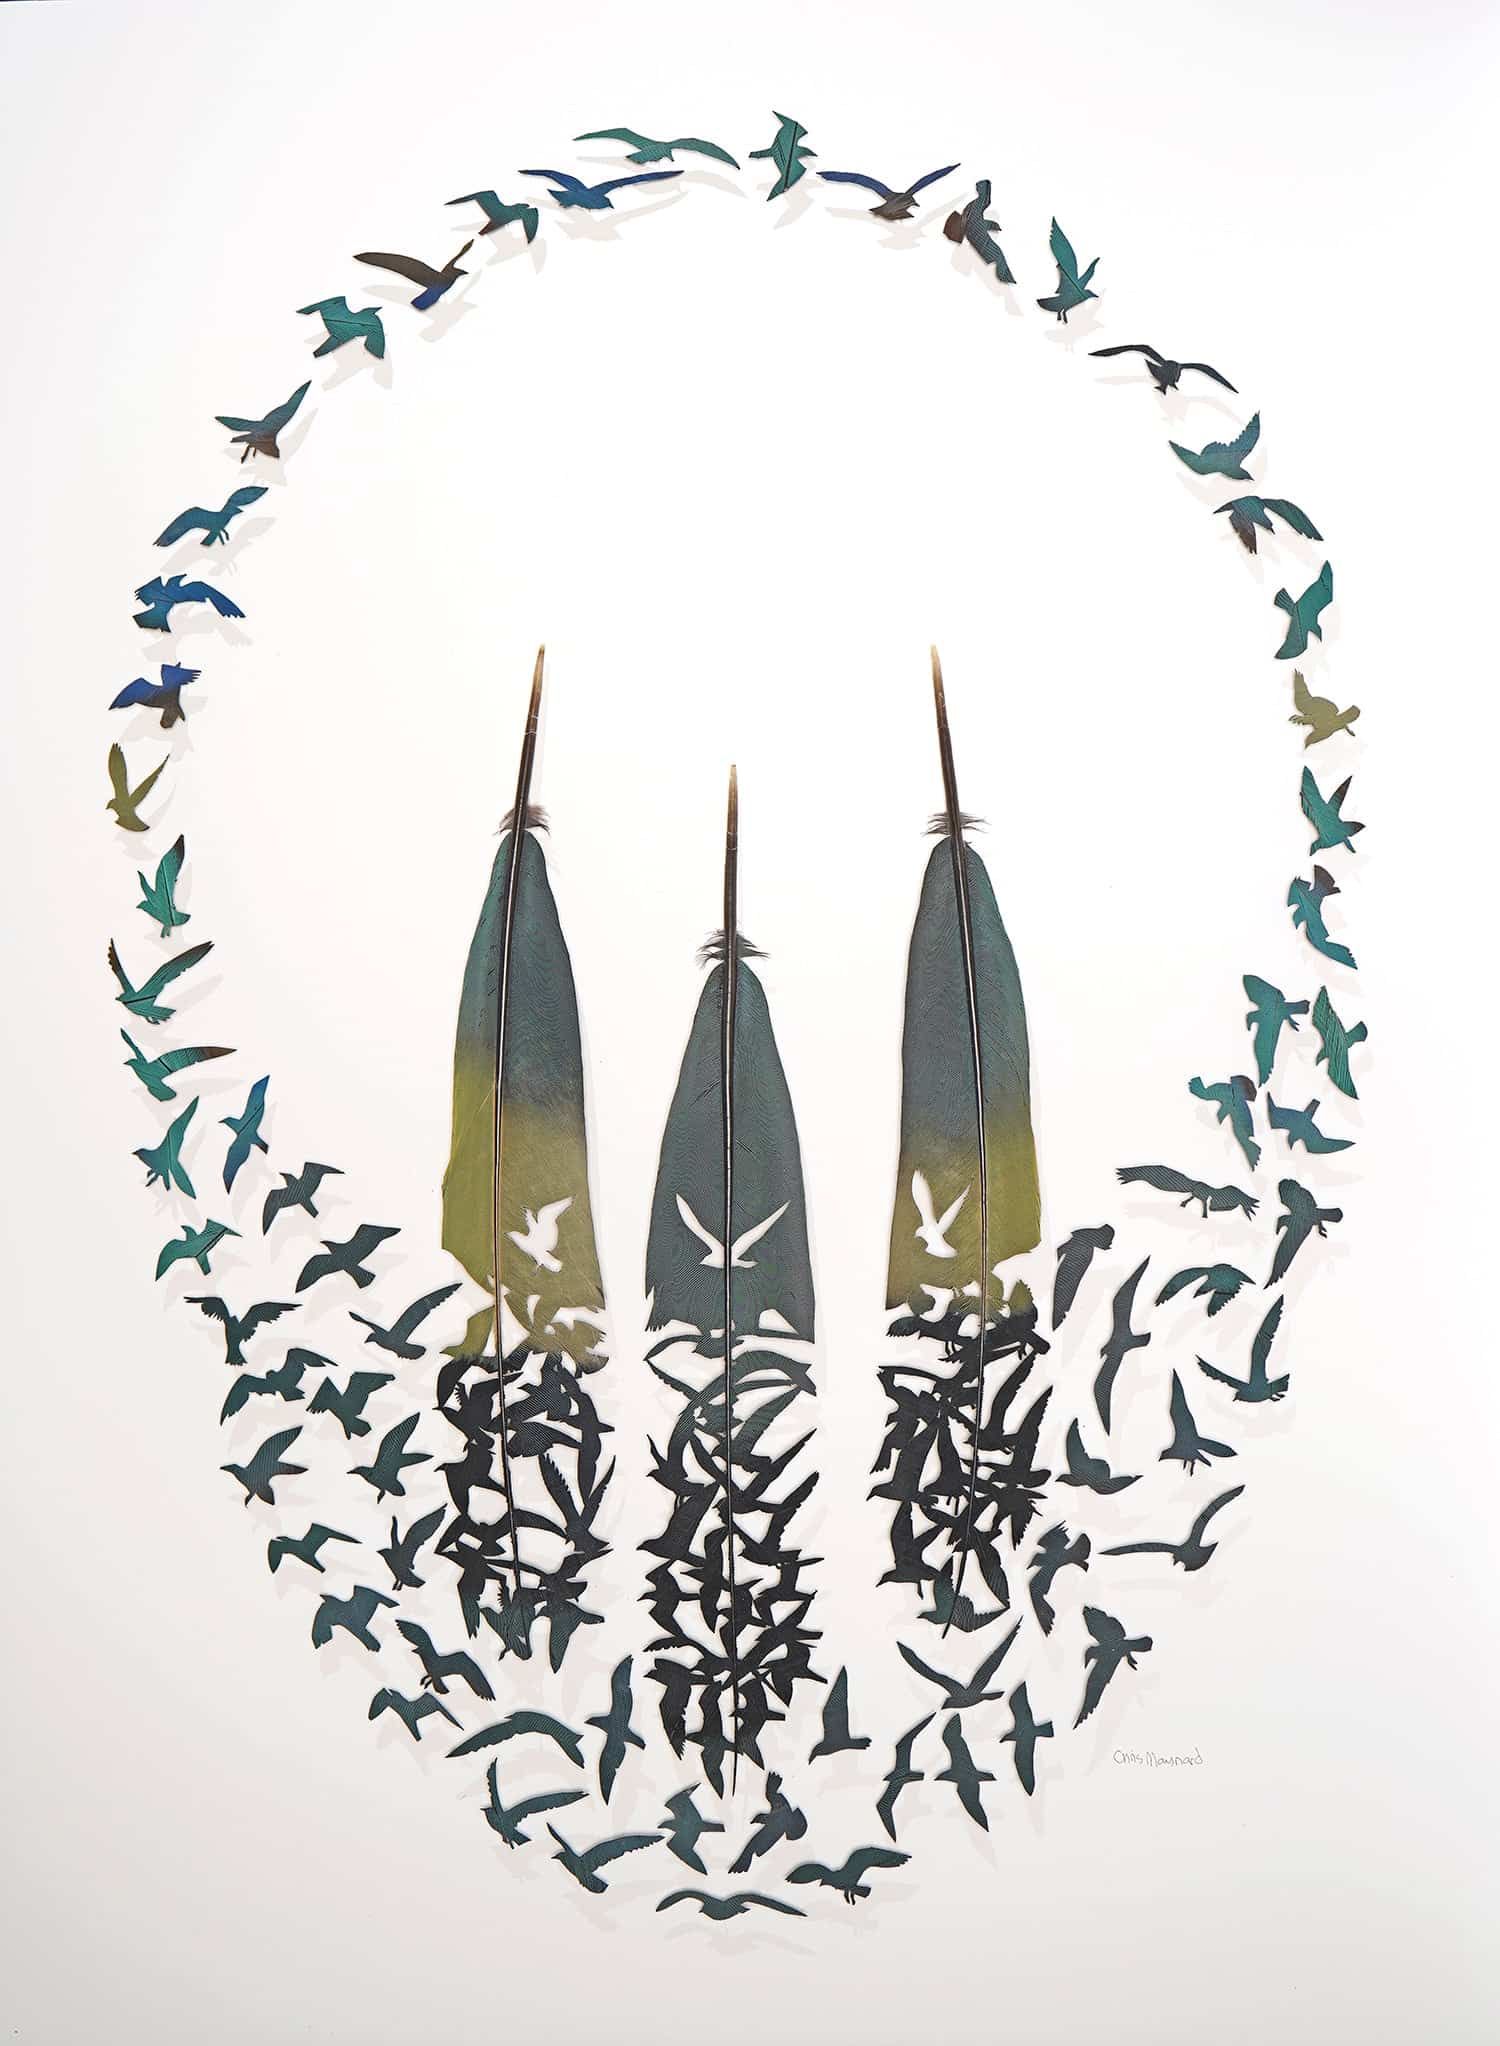 Chris Maynard hojas obra simbolica con pajaros volando en luma azul